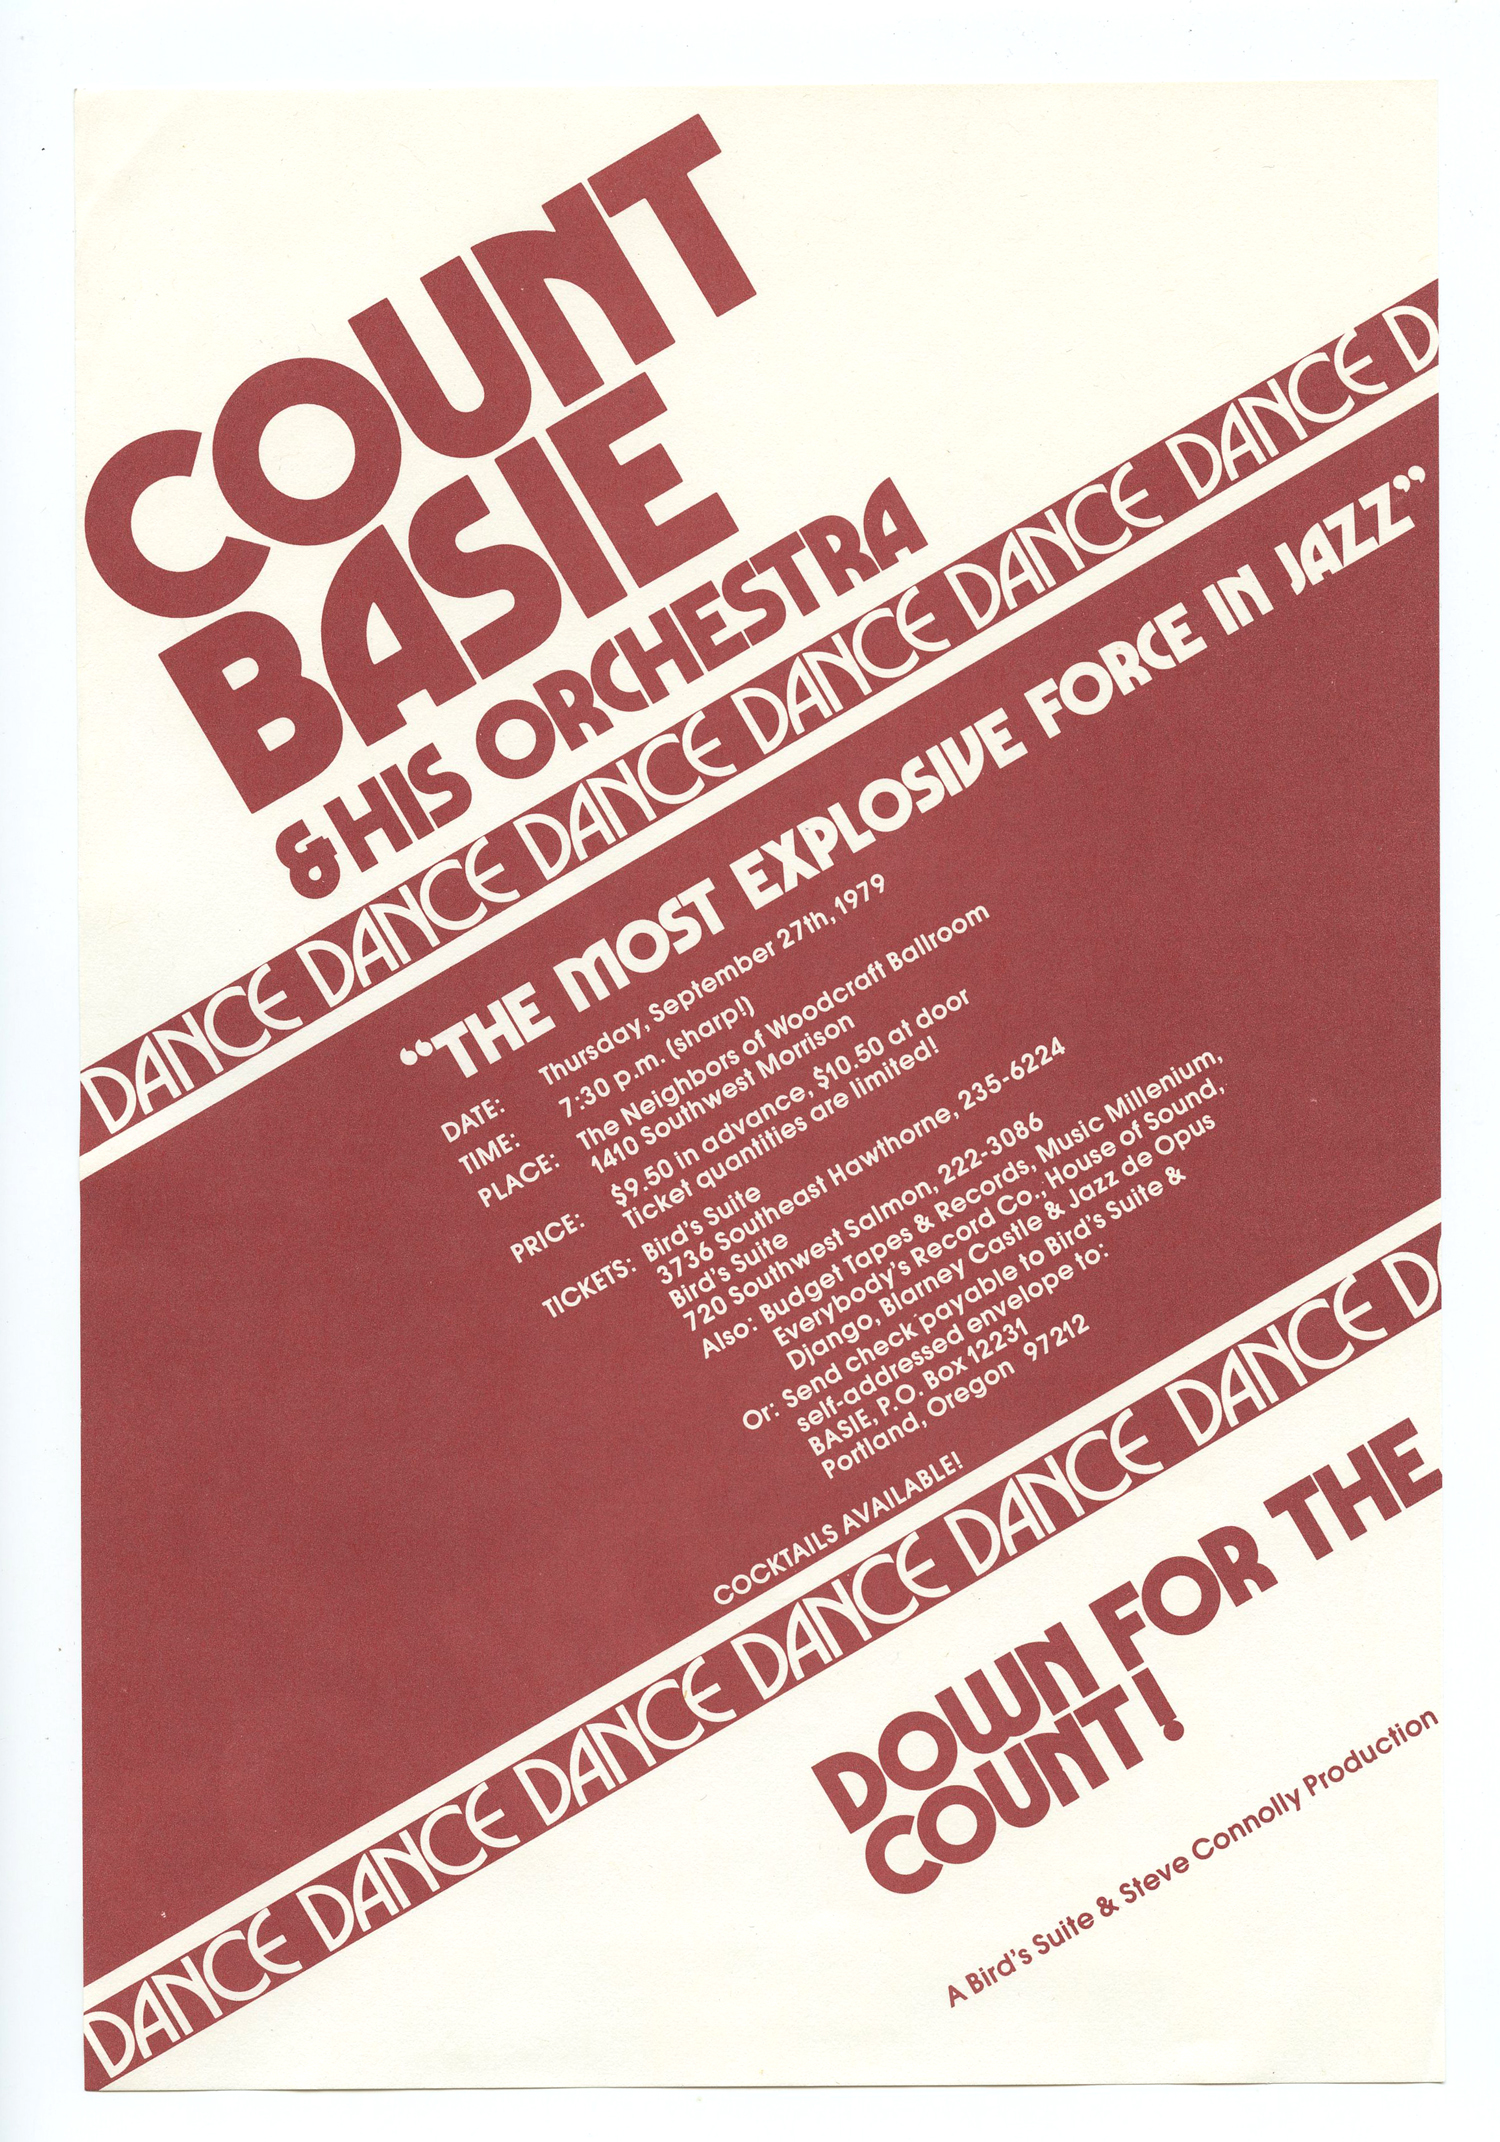 Count Basie Handbill 1979 September 27 Neighbors of Woodcraft Ballroom Portland